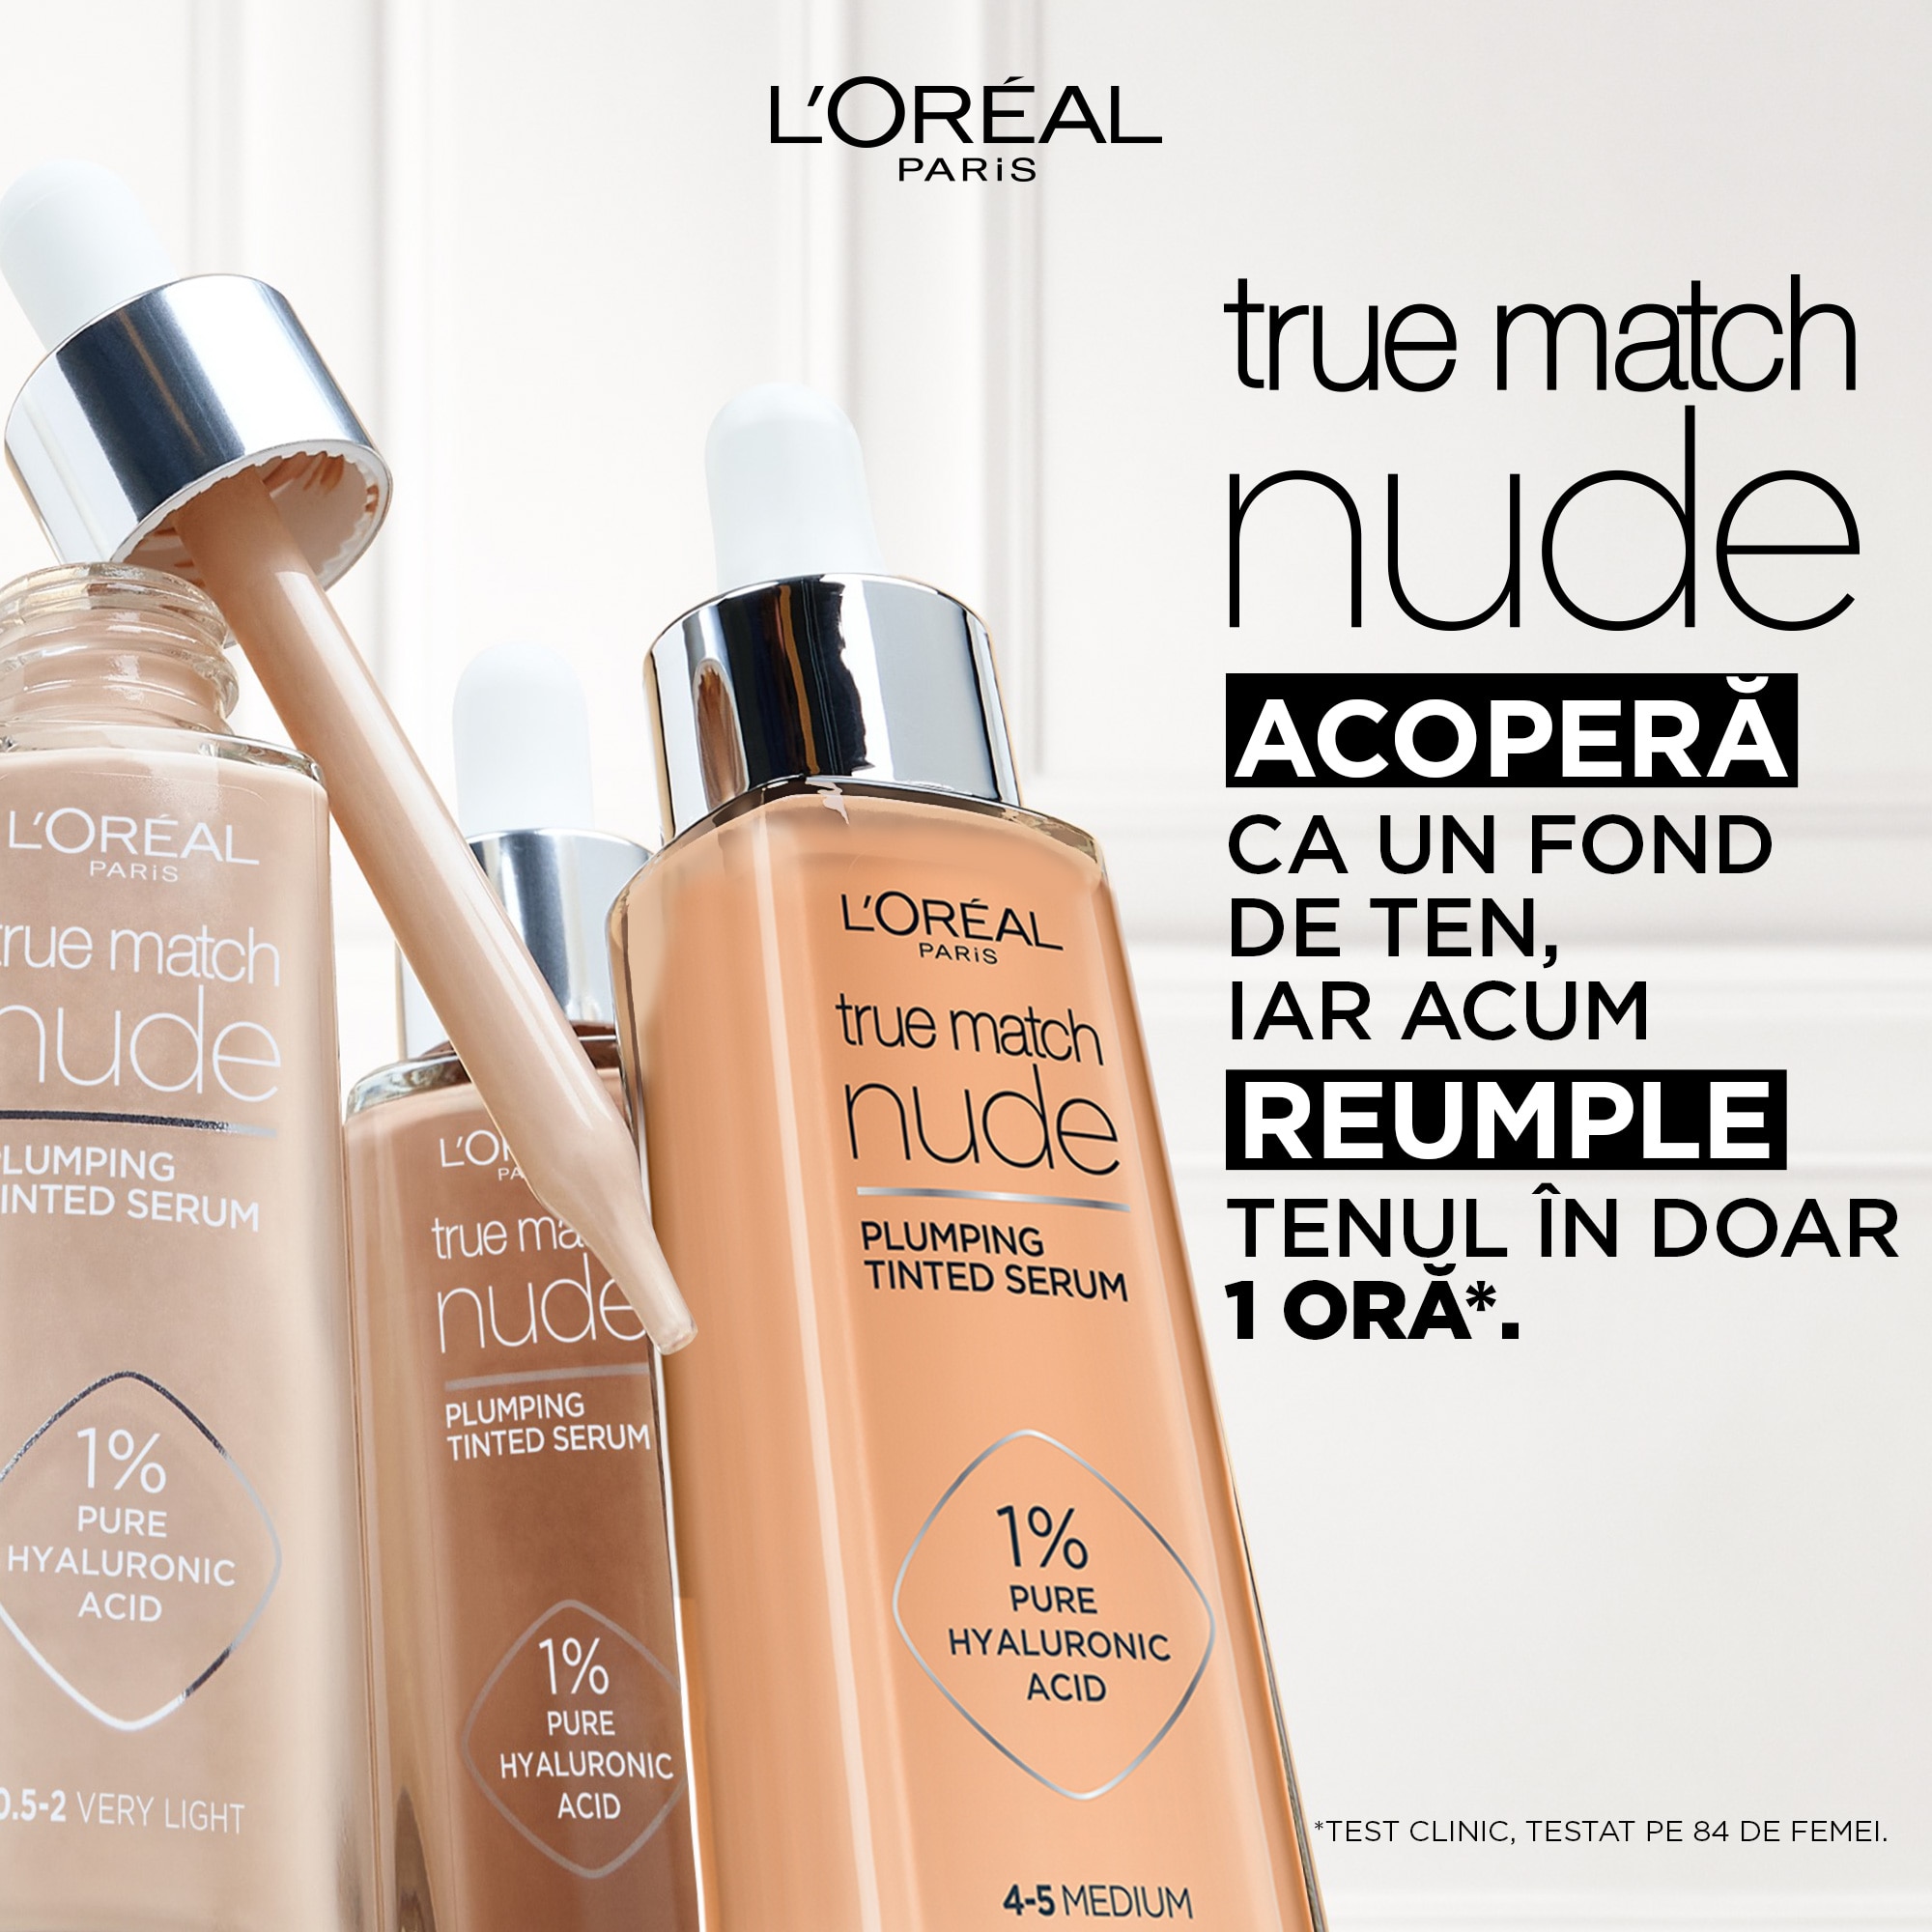 Buy L'Oréal Paris True Match Nude Plumping Tinted Serum 0,5-2